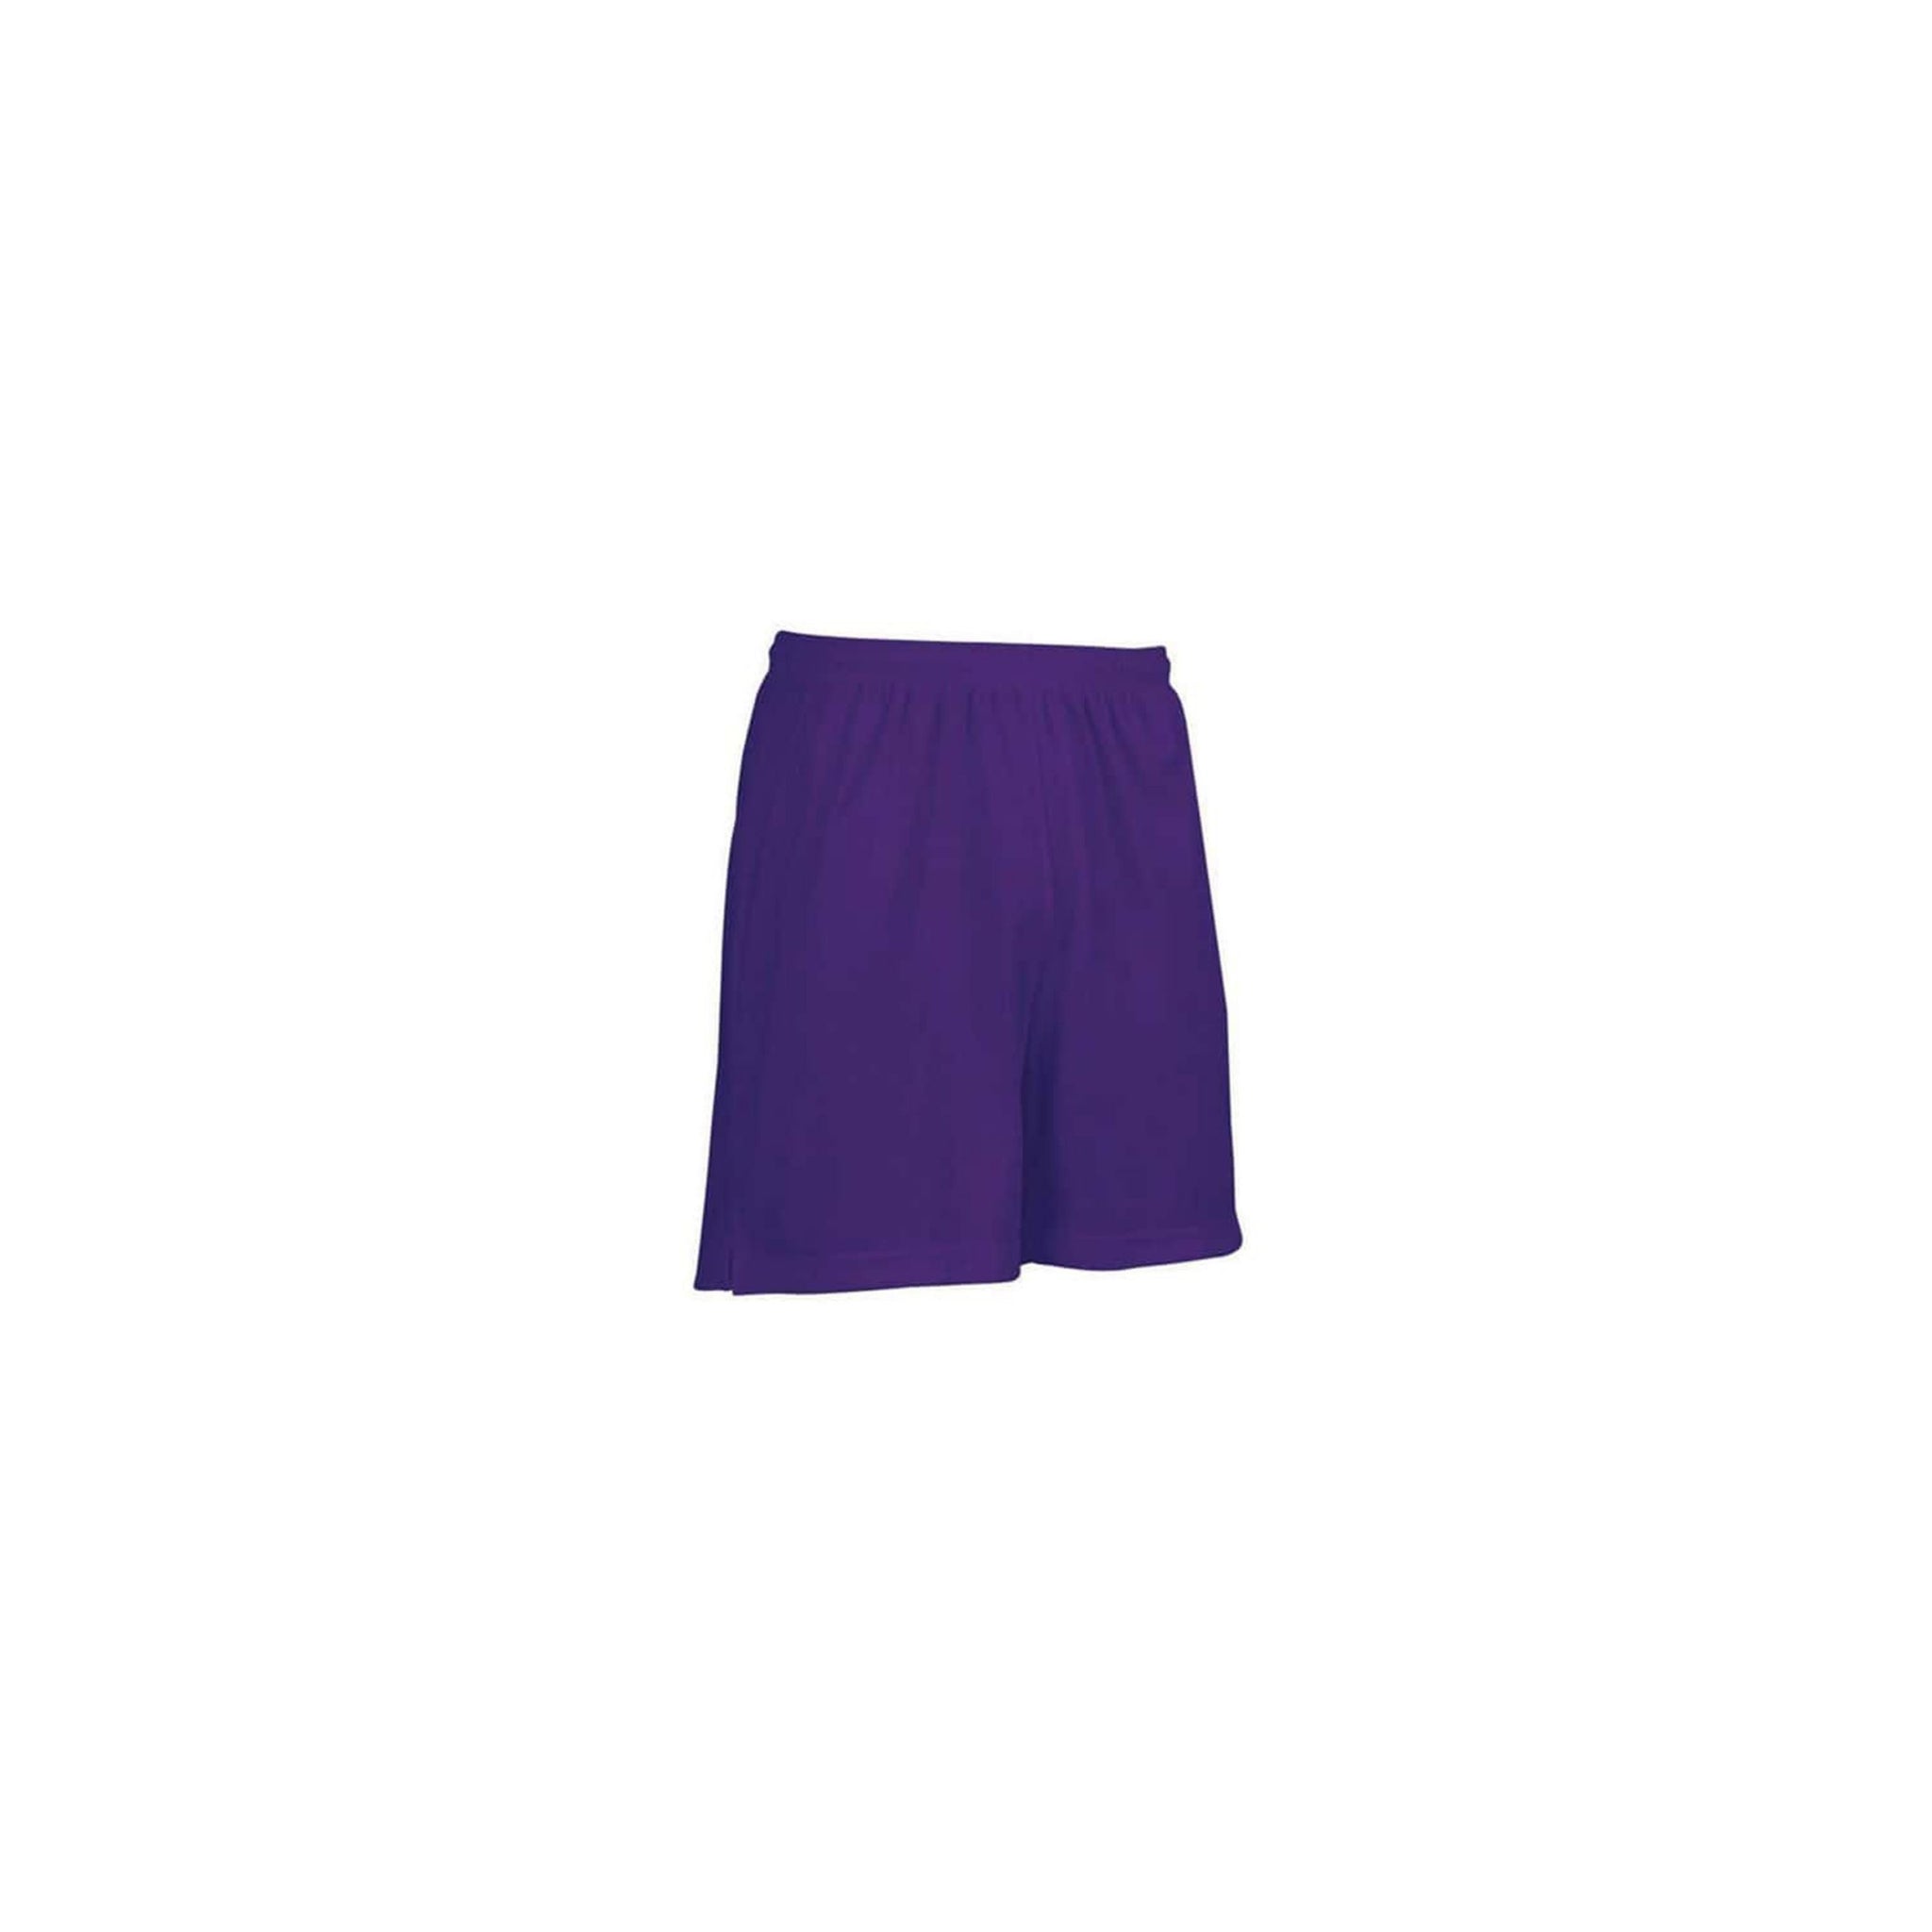 DIADORA Calcio Short (Purple)